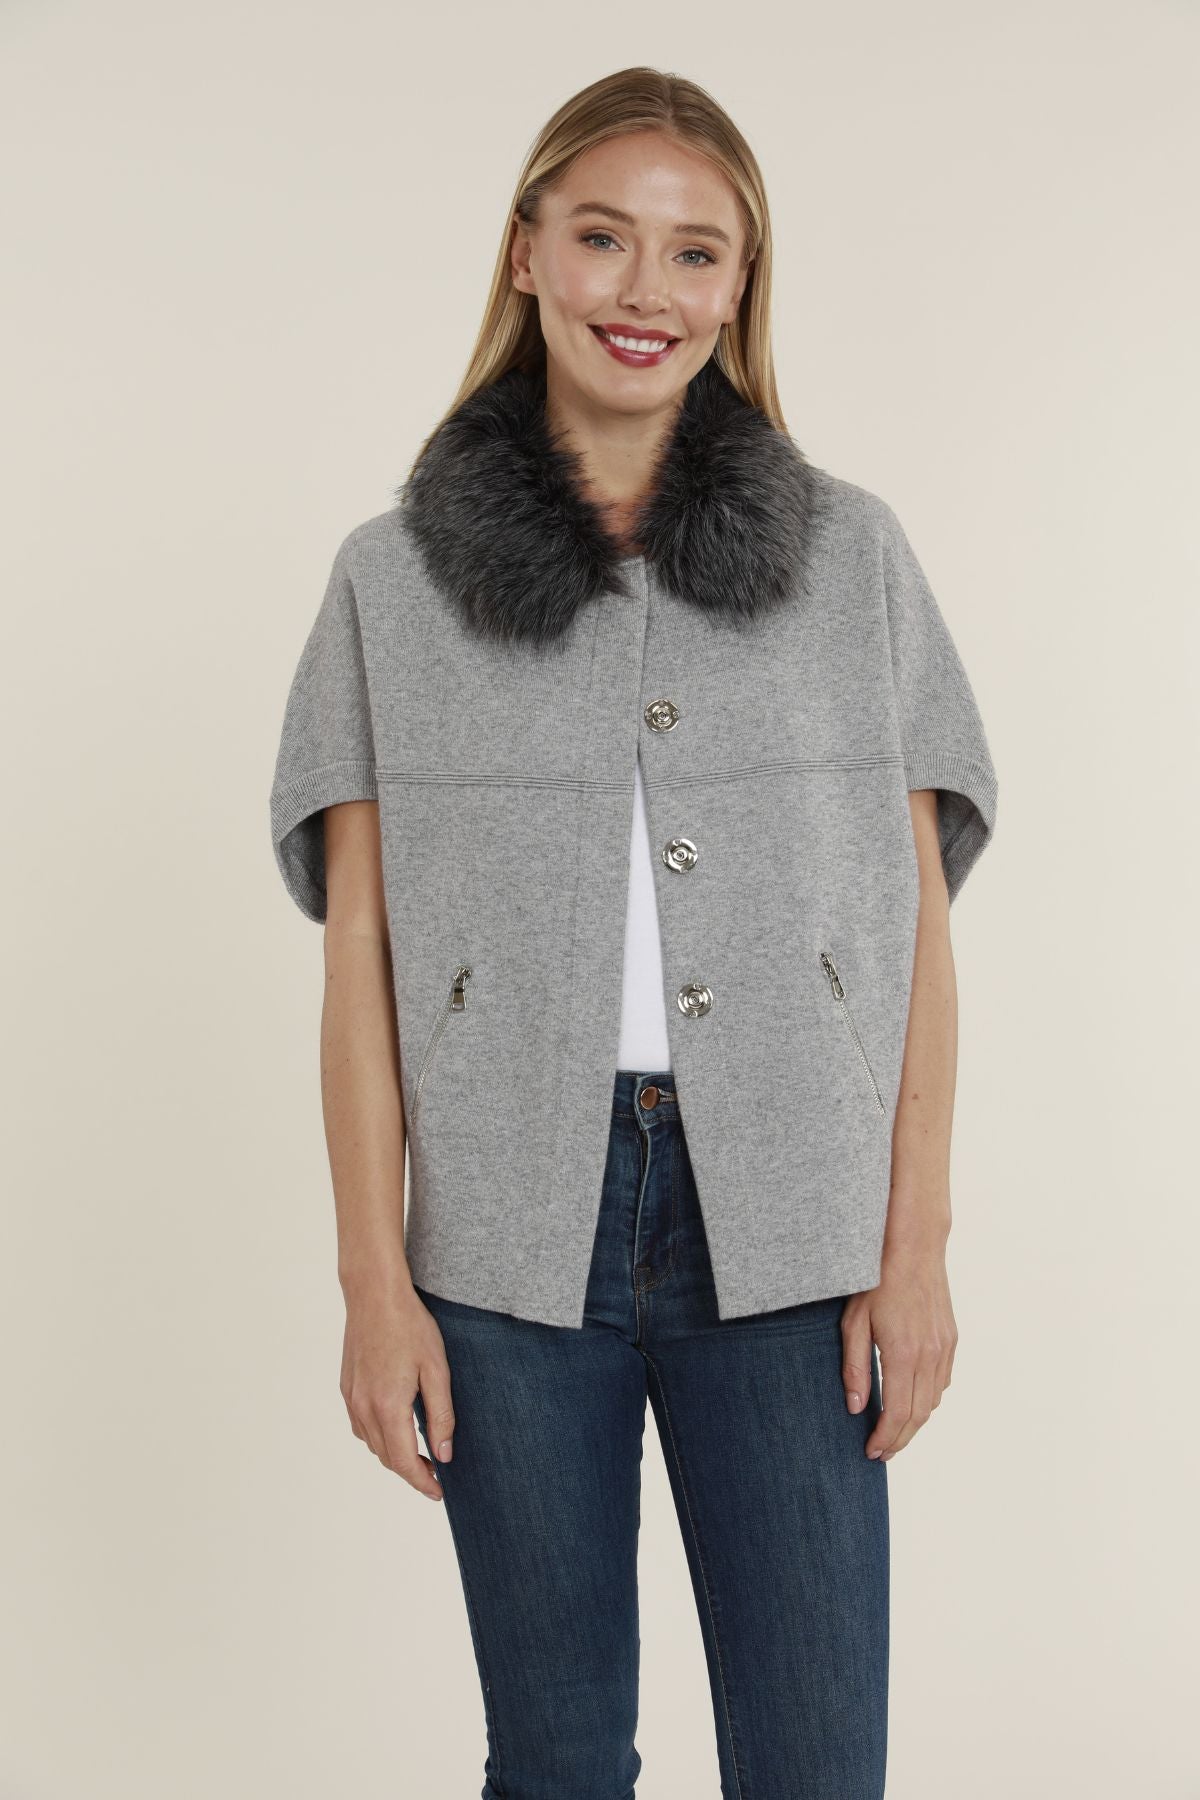 Woman in grey faux fur sweater